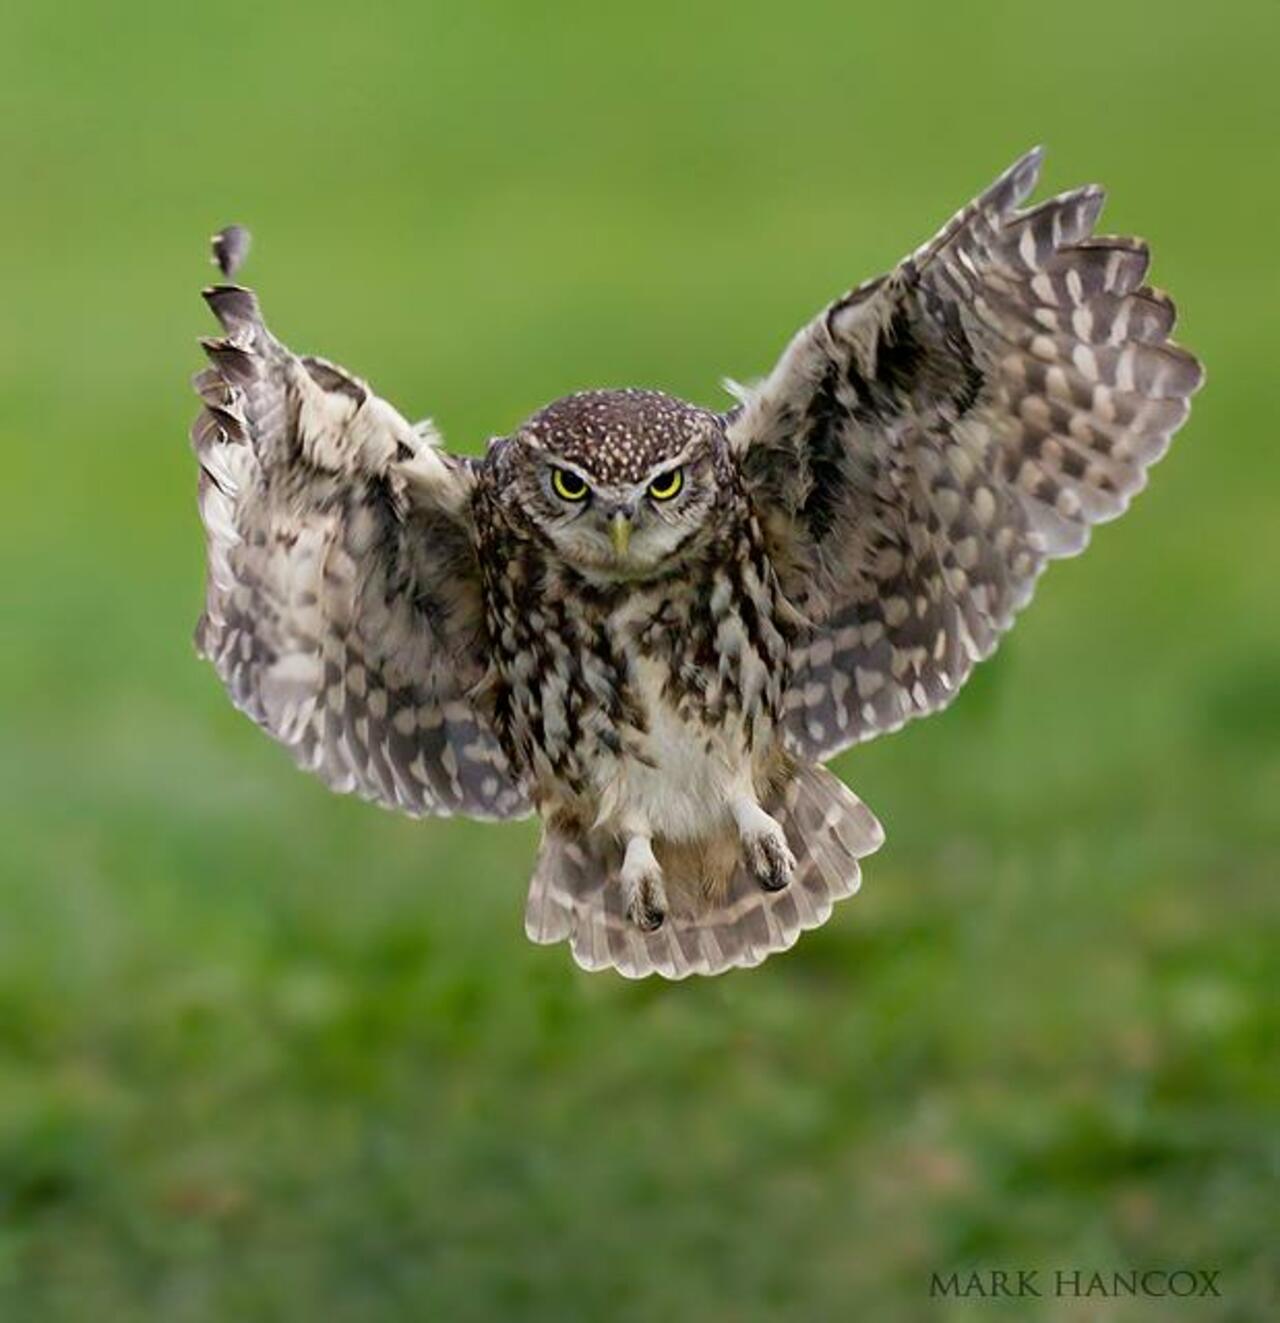 66 'Little #Owls' #Birds #Photography Gallery by Mark Hancox: http://bit.ly/1bGFM8C" http://t.co/dztiObs9T9